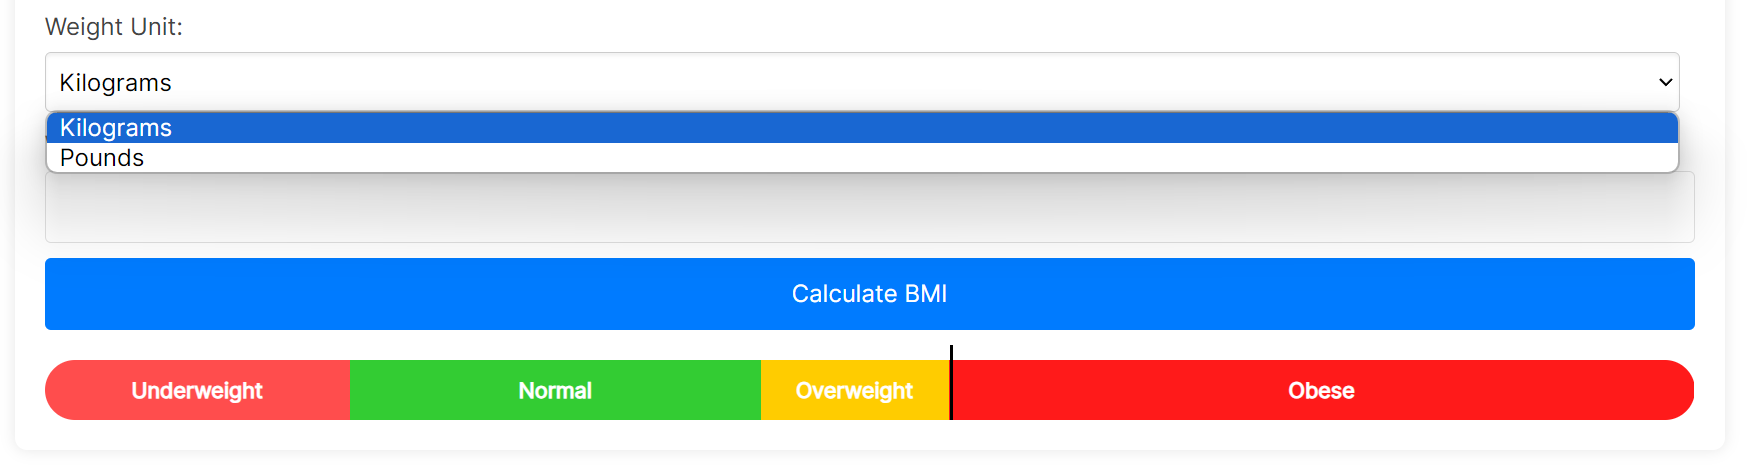 Body Mass Index (BMI) Calculator Tool